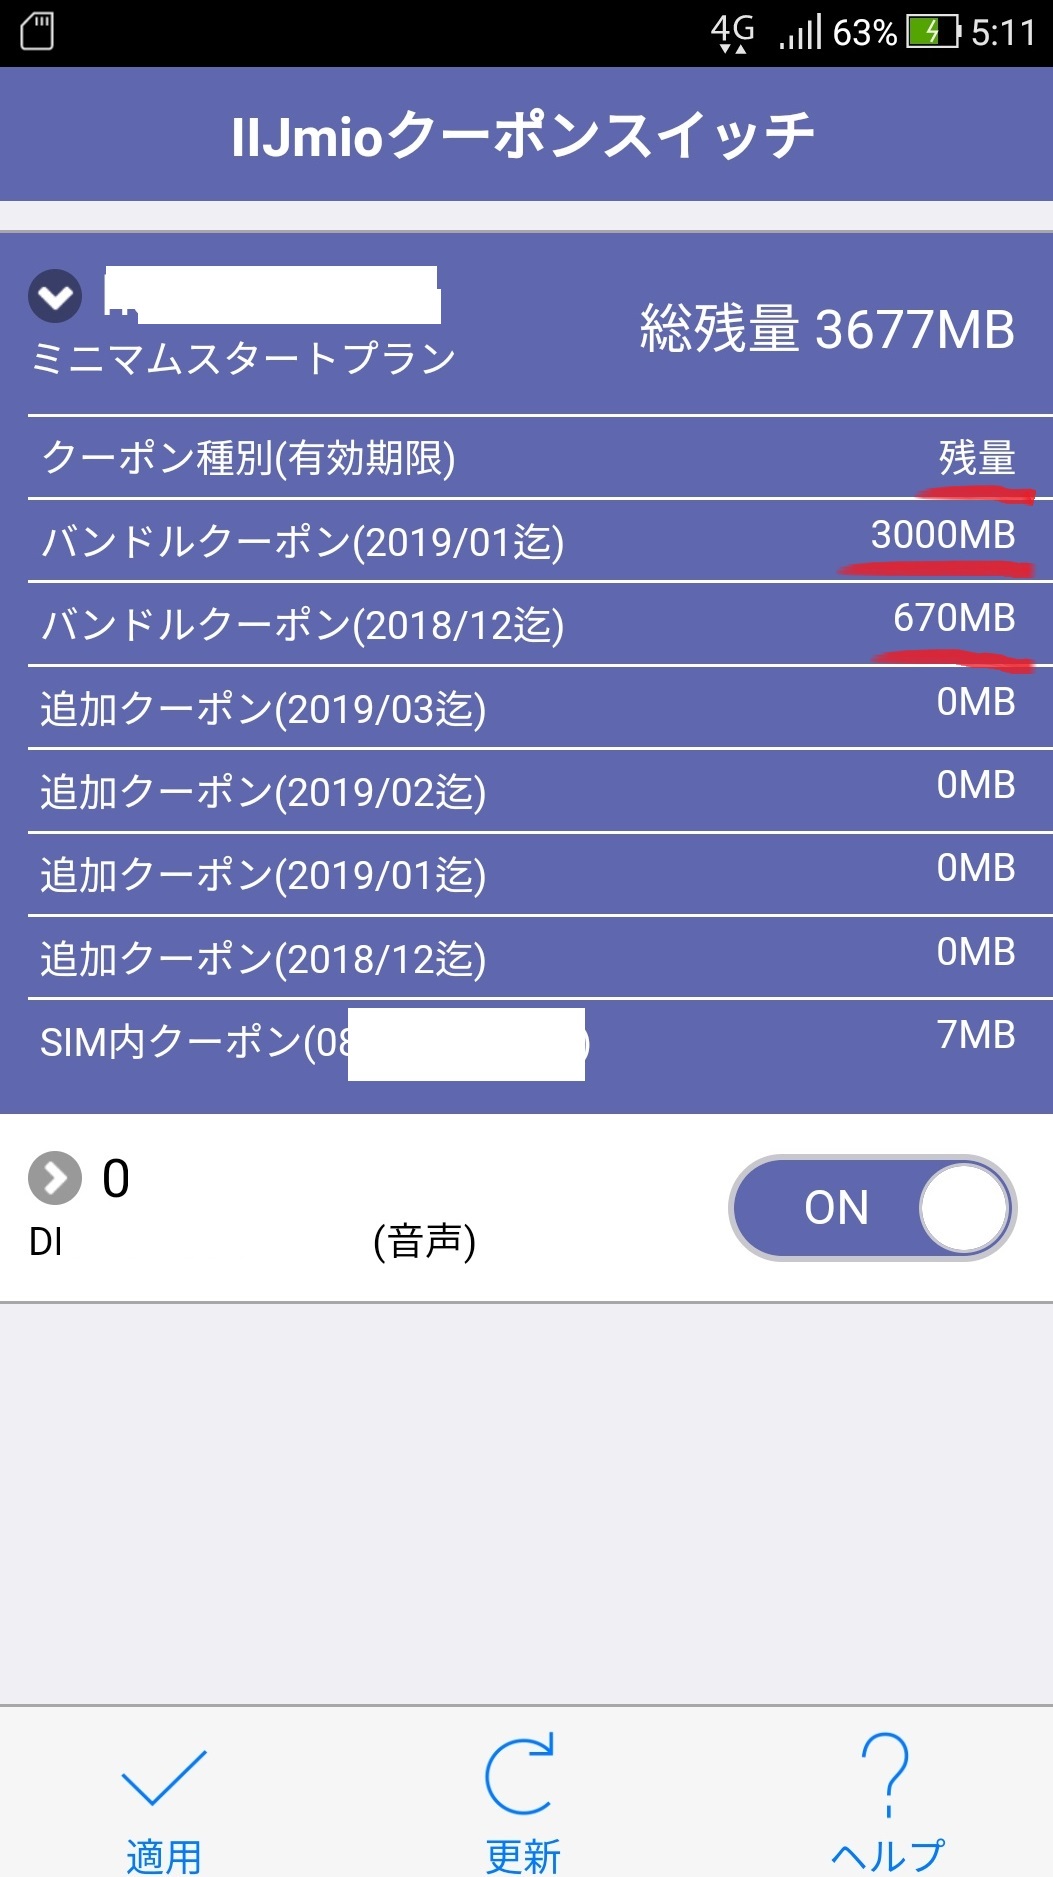 kakuyasu_sumaho_IIJmio_app_data.jpg